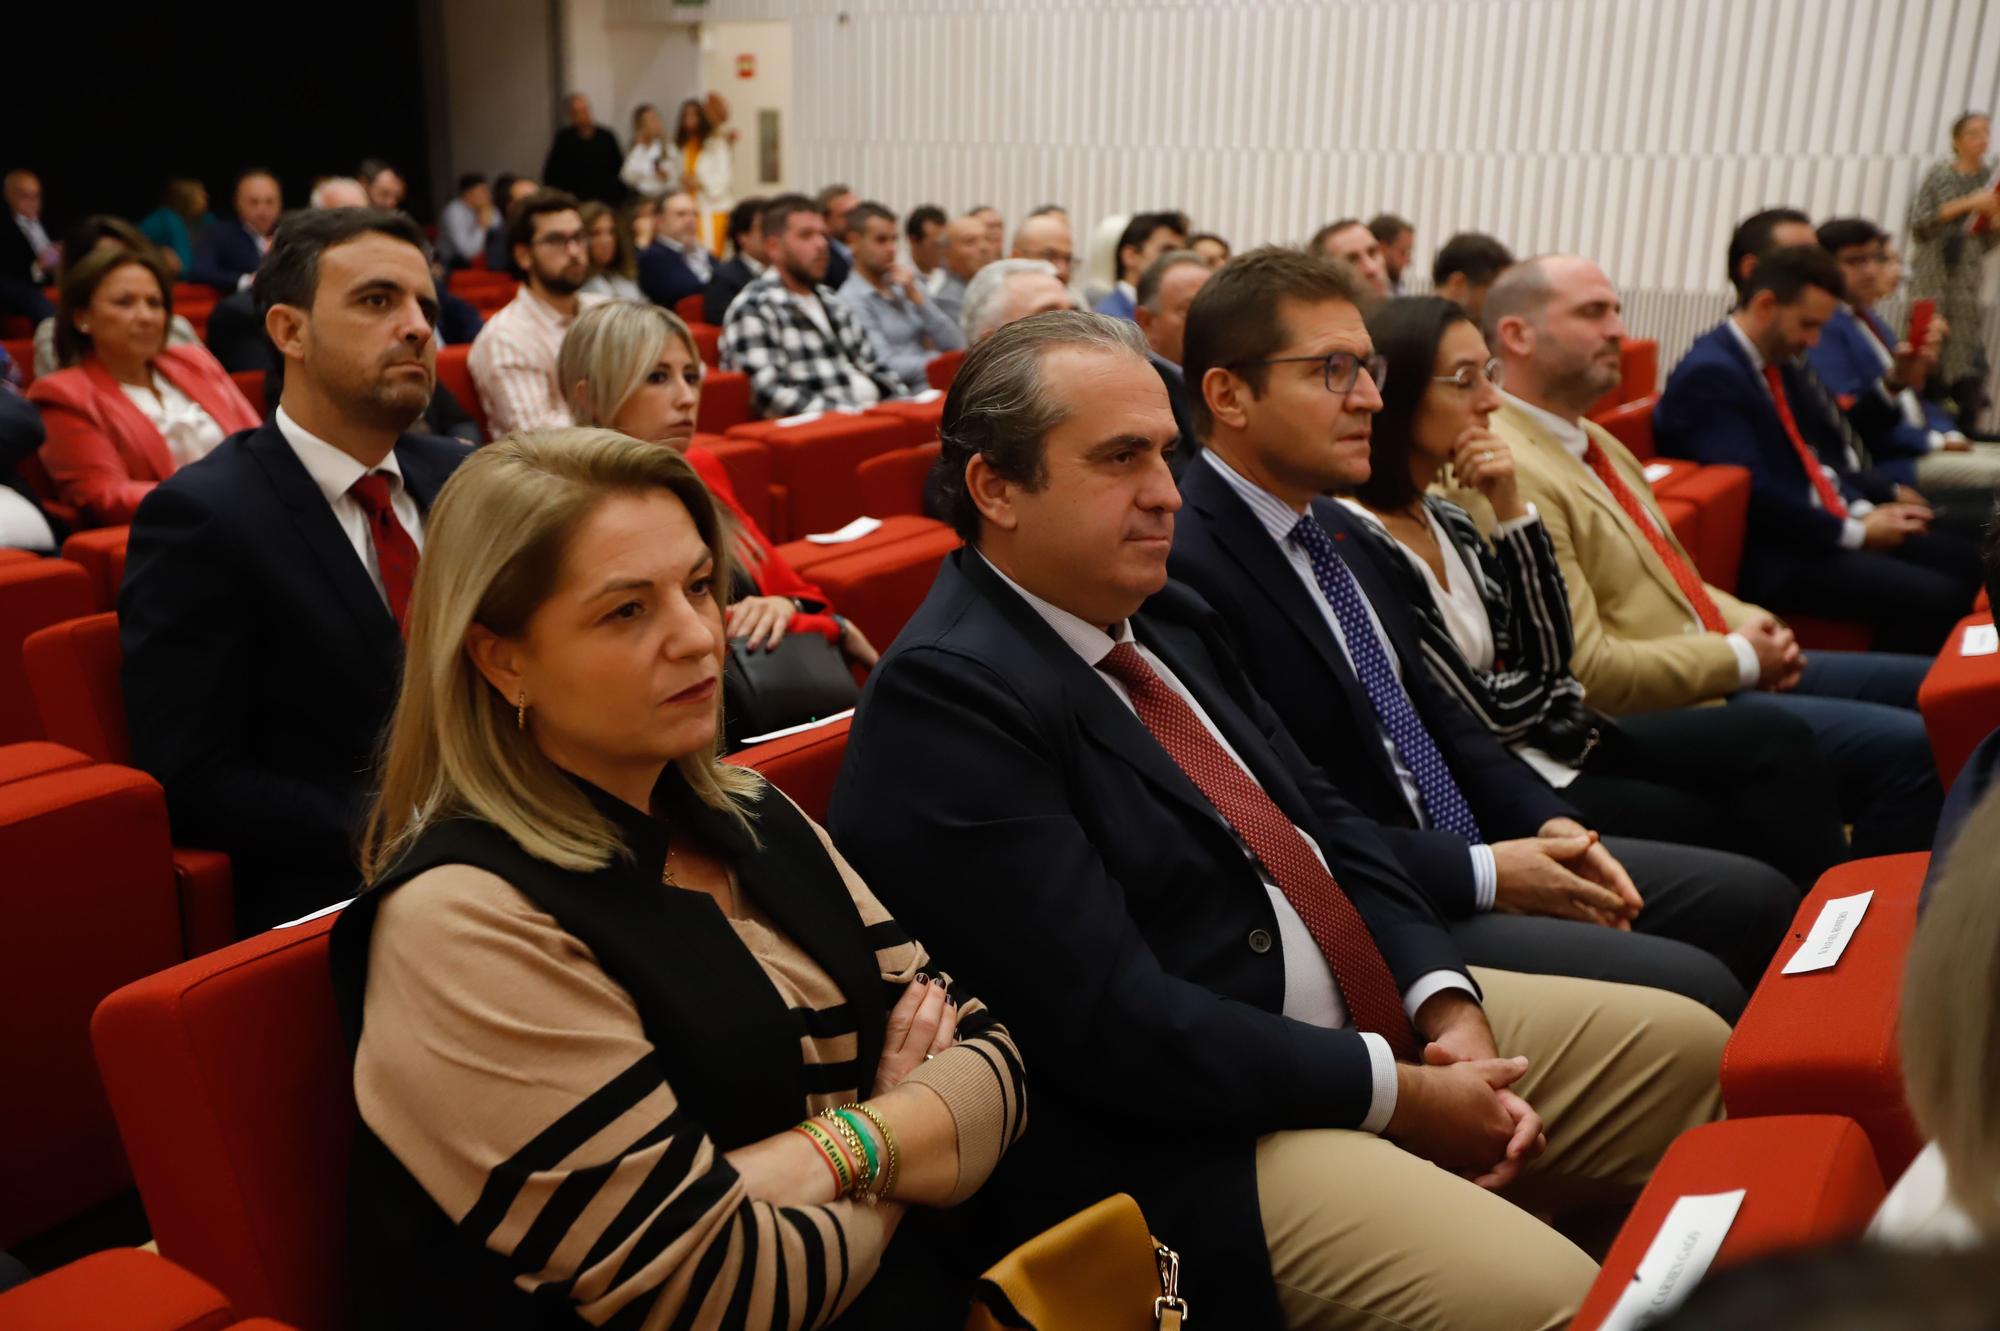 Gala del premio Pyme del Año 2022 de Córdoba